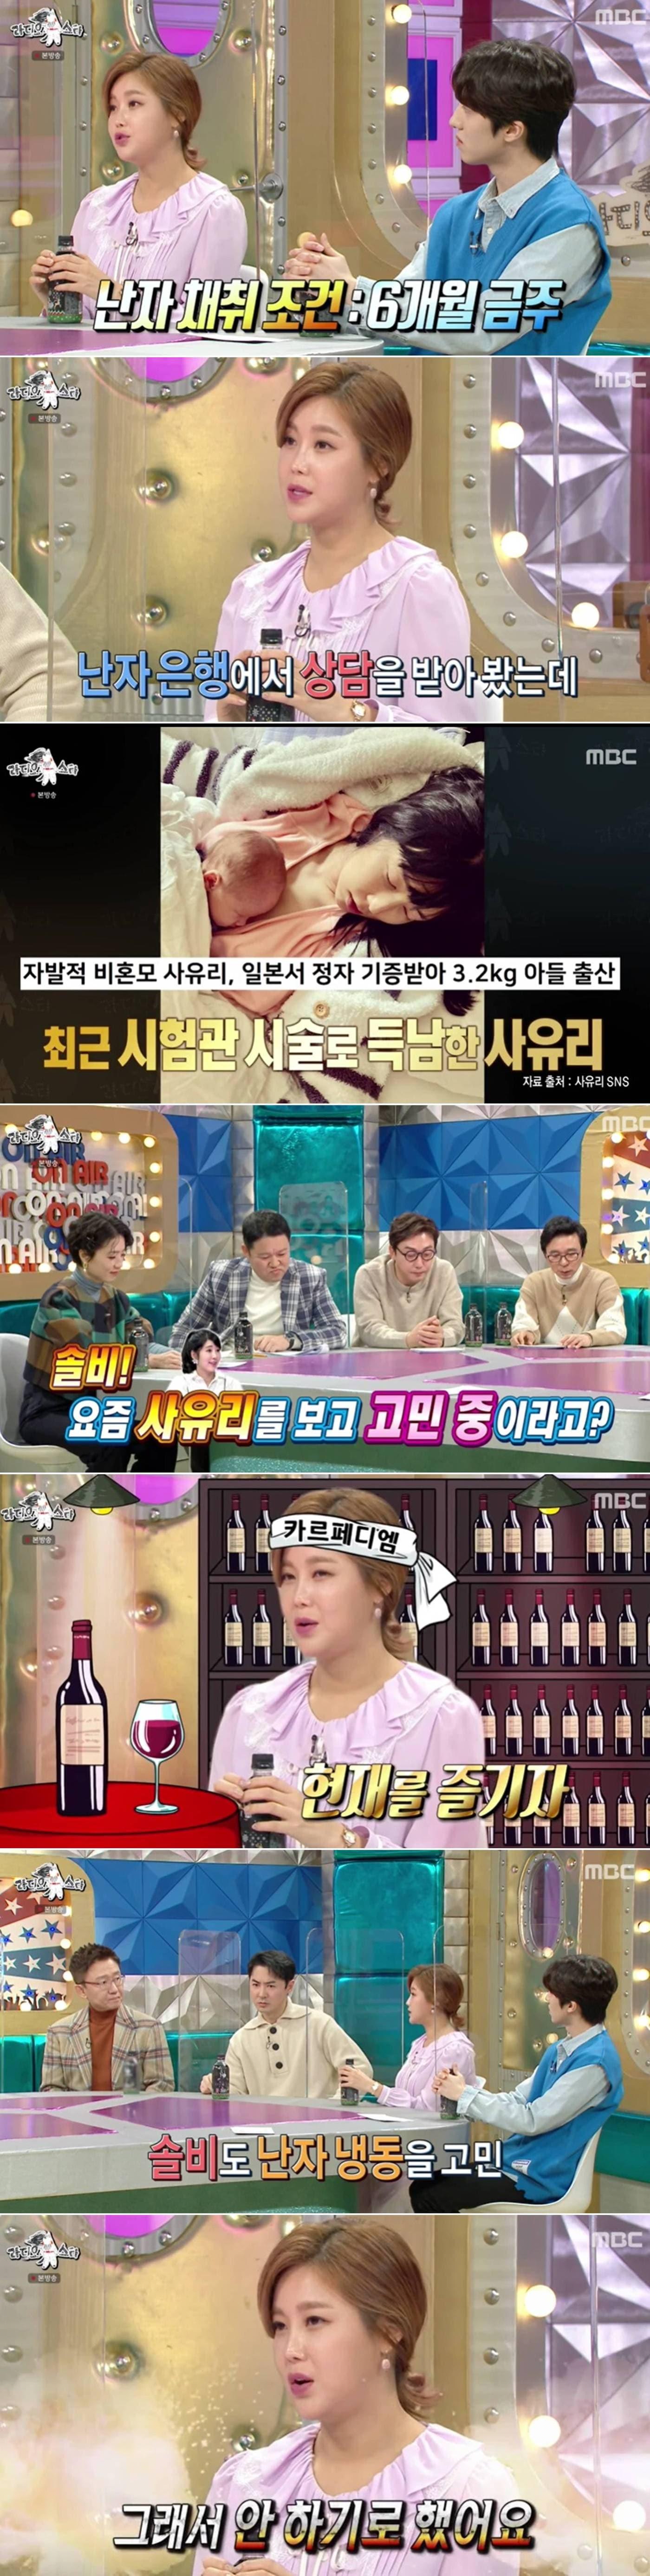 MBC 예능 프로그램 라디오스타 방송화면 갈무리 ⓒ 뉴스1